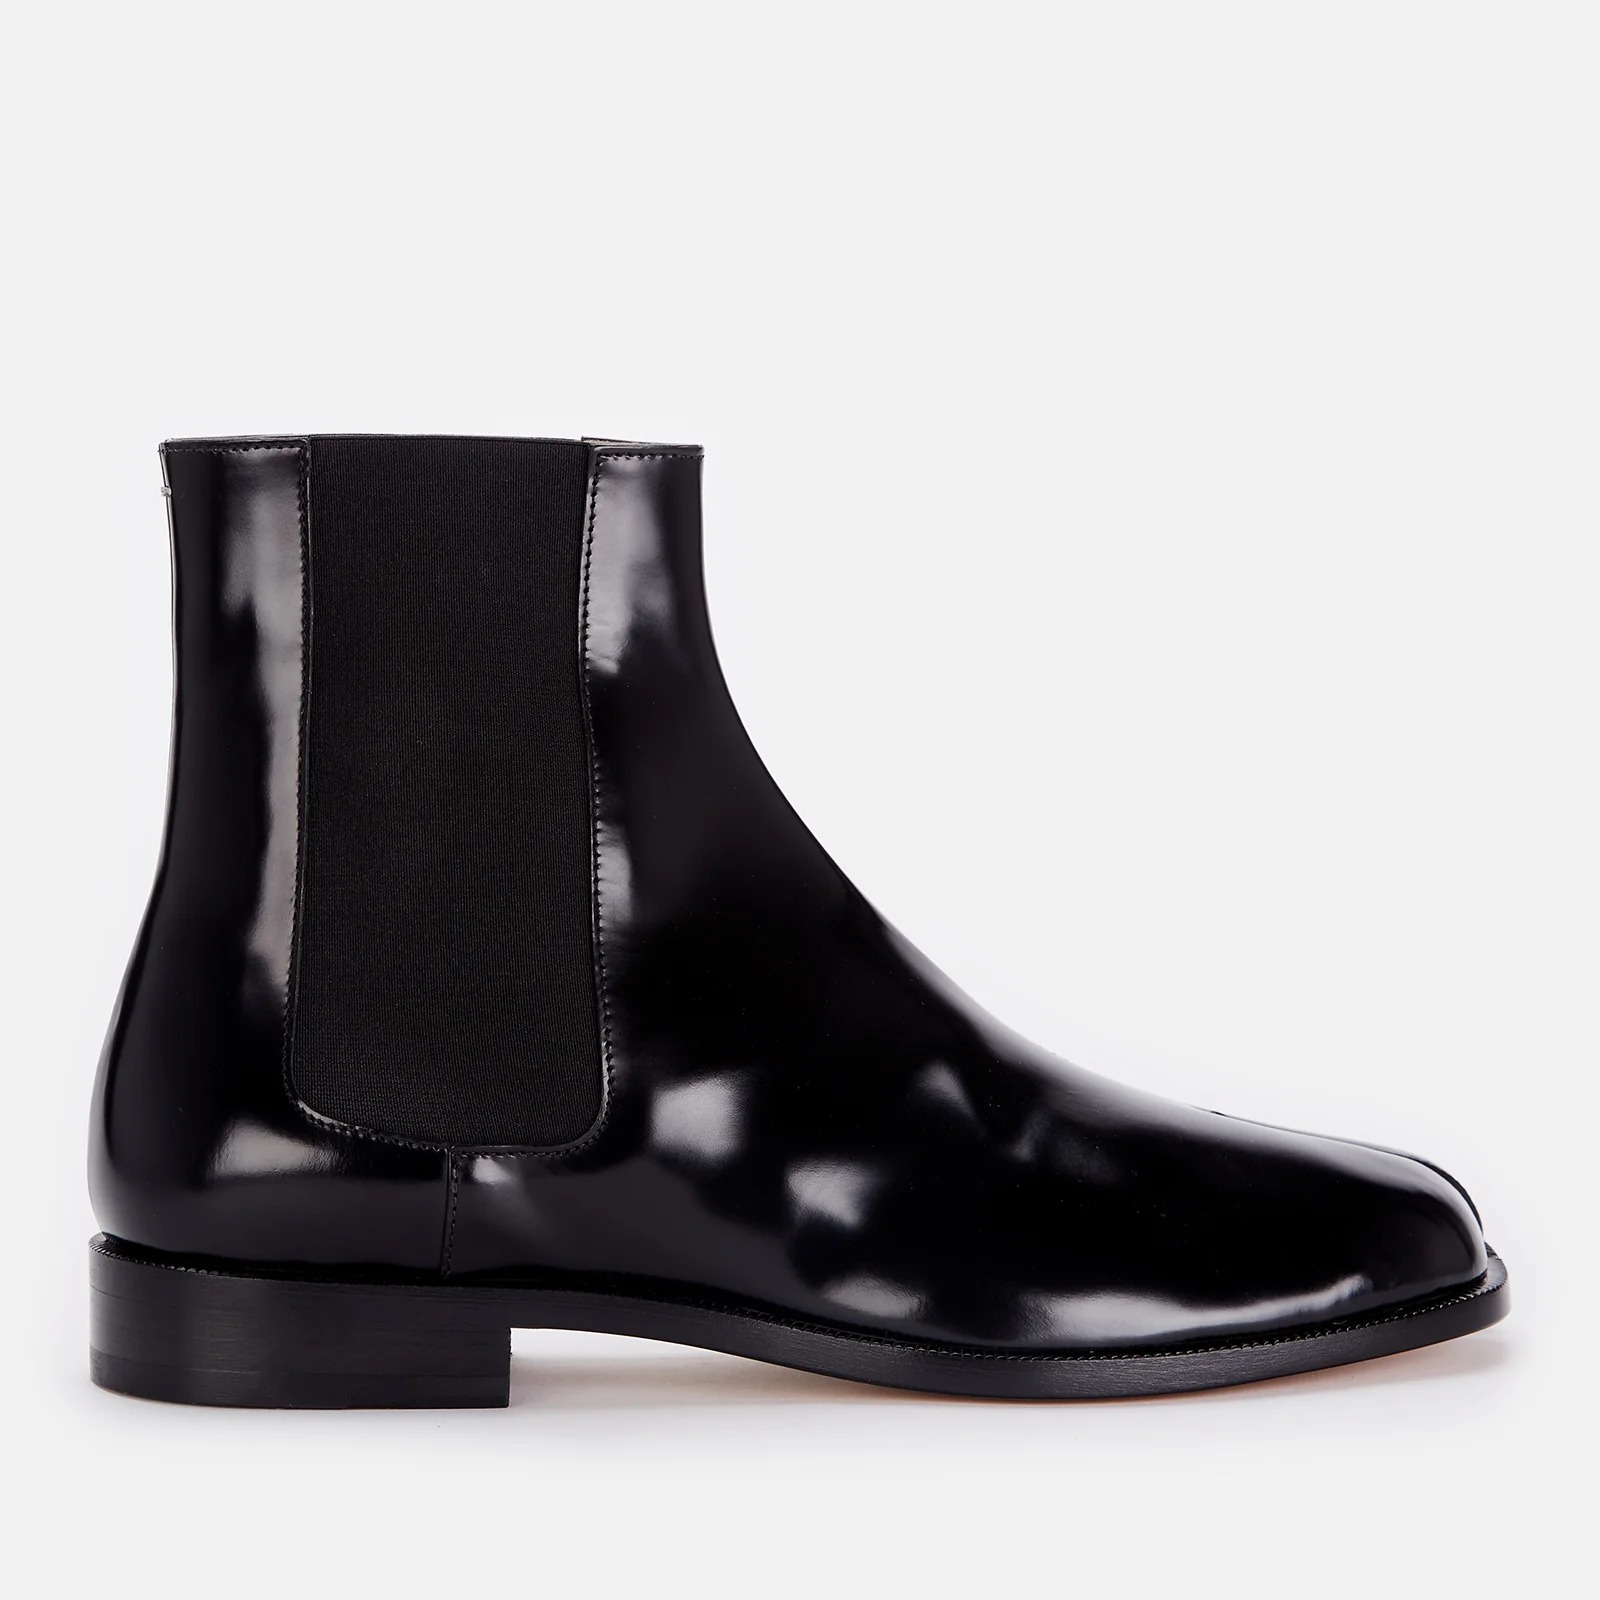 Maison Margiela Men's Tabi Advocate Boots - Black Image 1